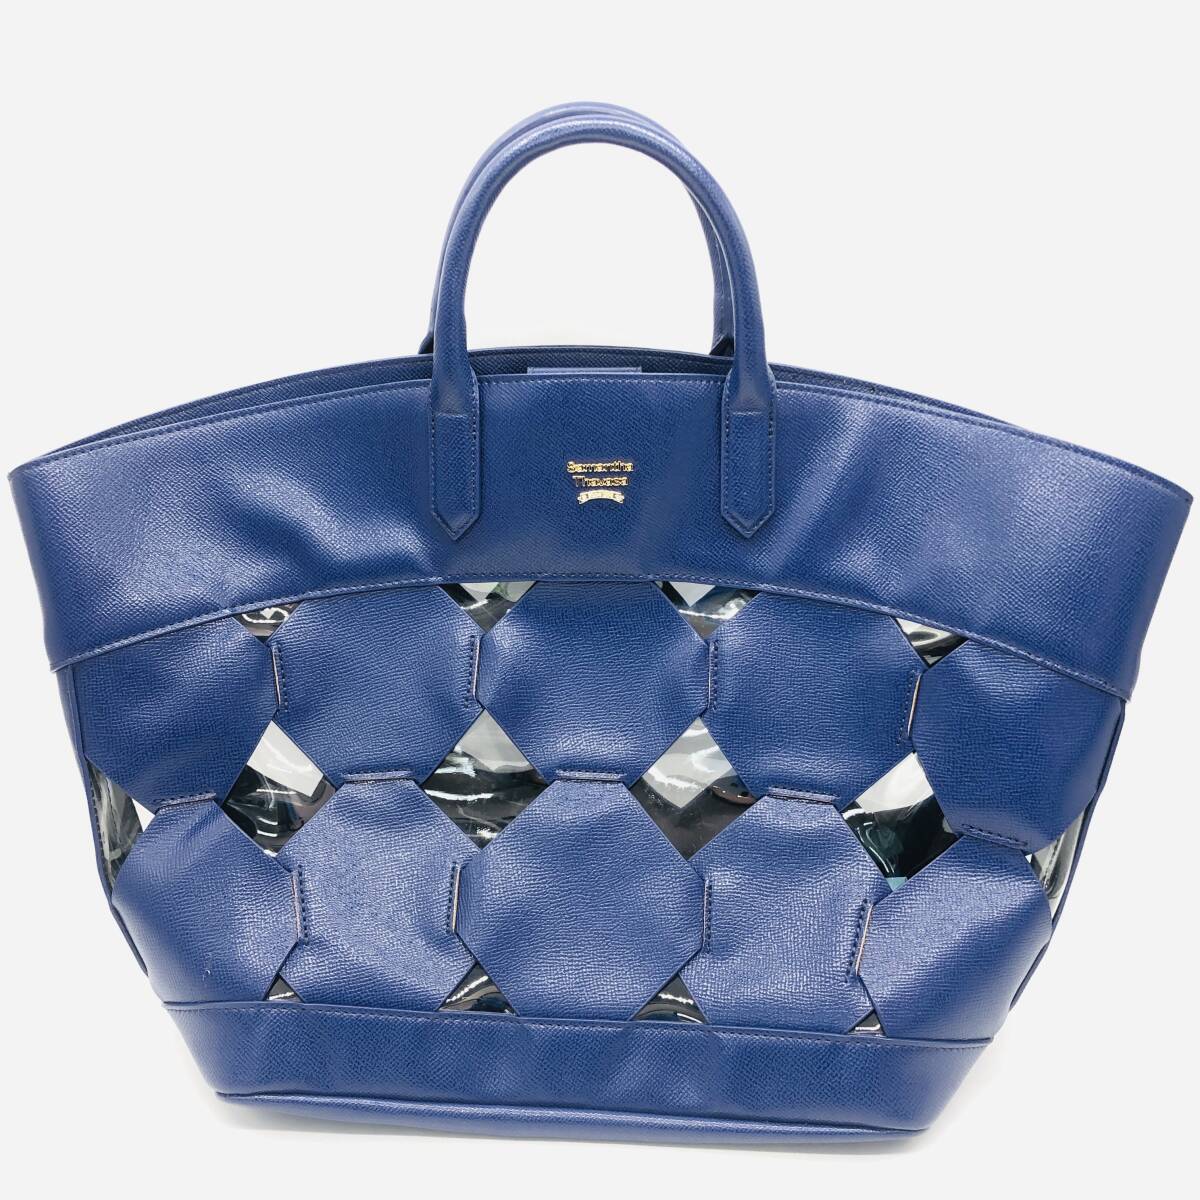  хранение товар samantha thavasa Samantha Thavasa большая сумка темно-синий синий прозрачный сумка большая вместимость 